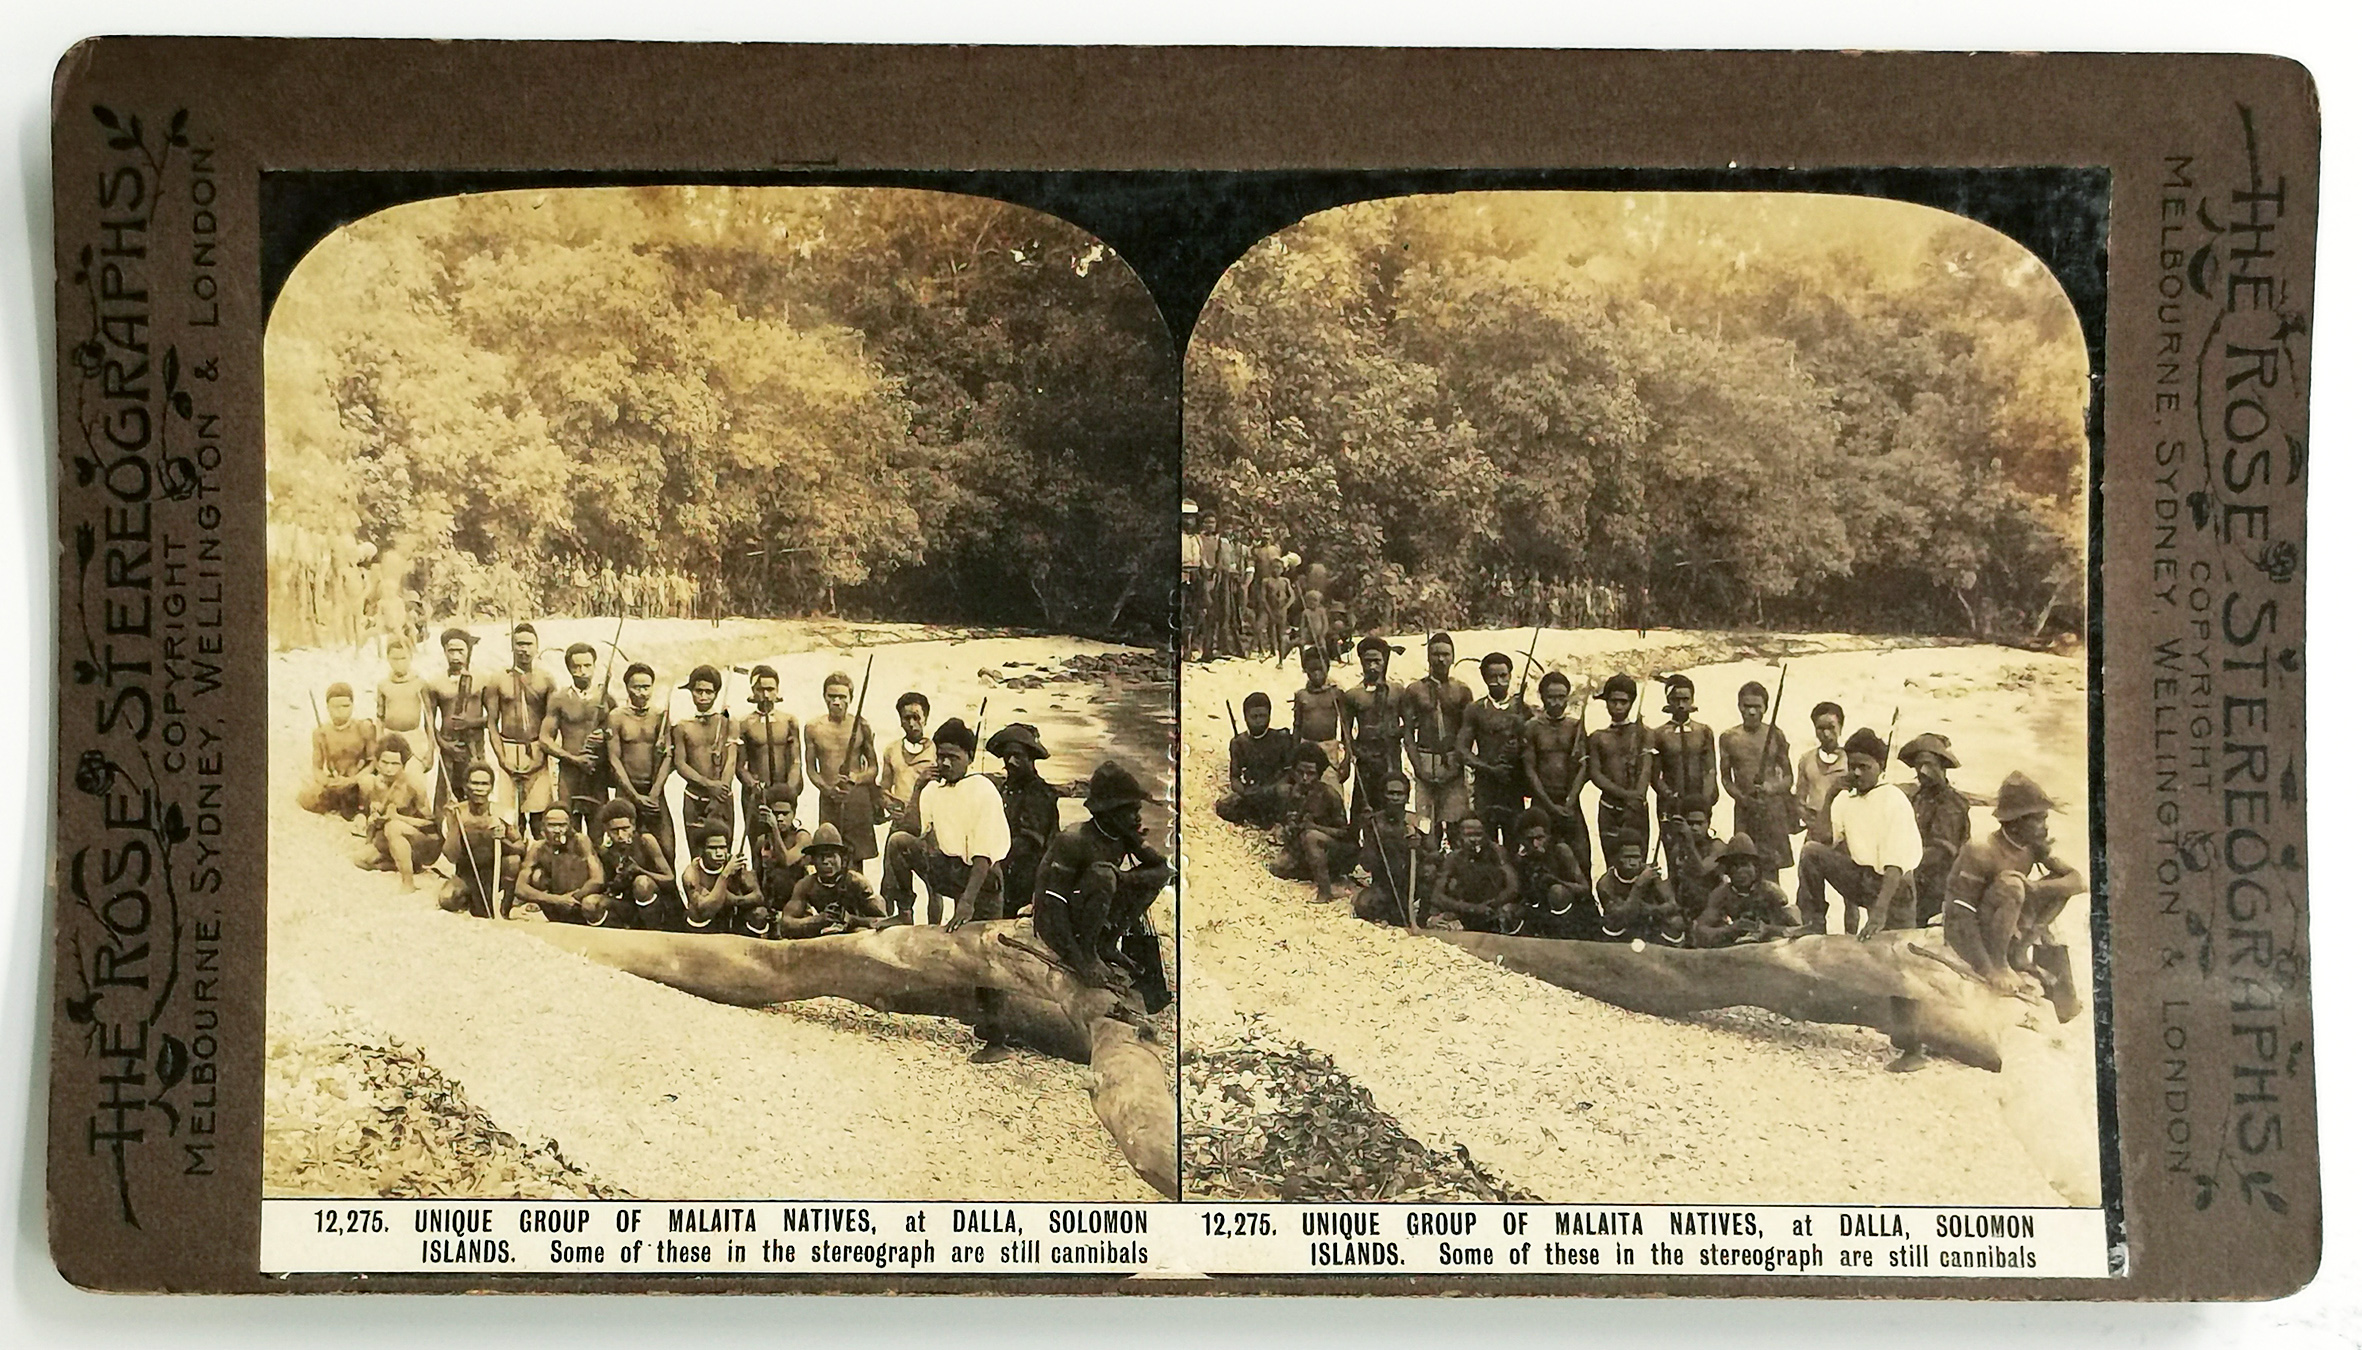 Unique group of Malaita Natives at Dalla, Solomon Islands. - Antique Photograph from 1905